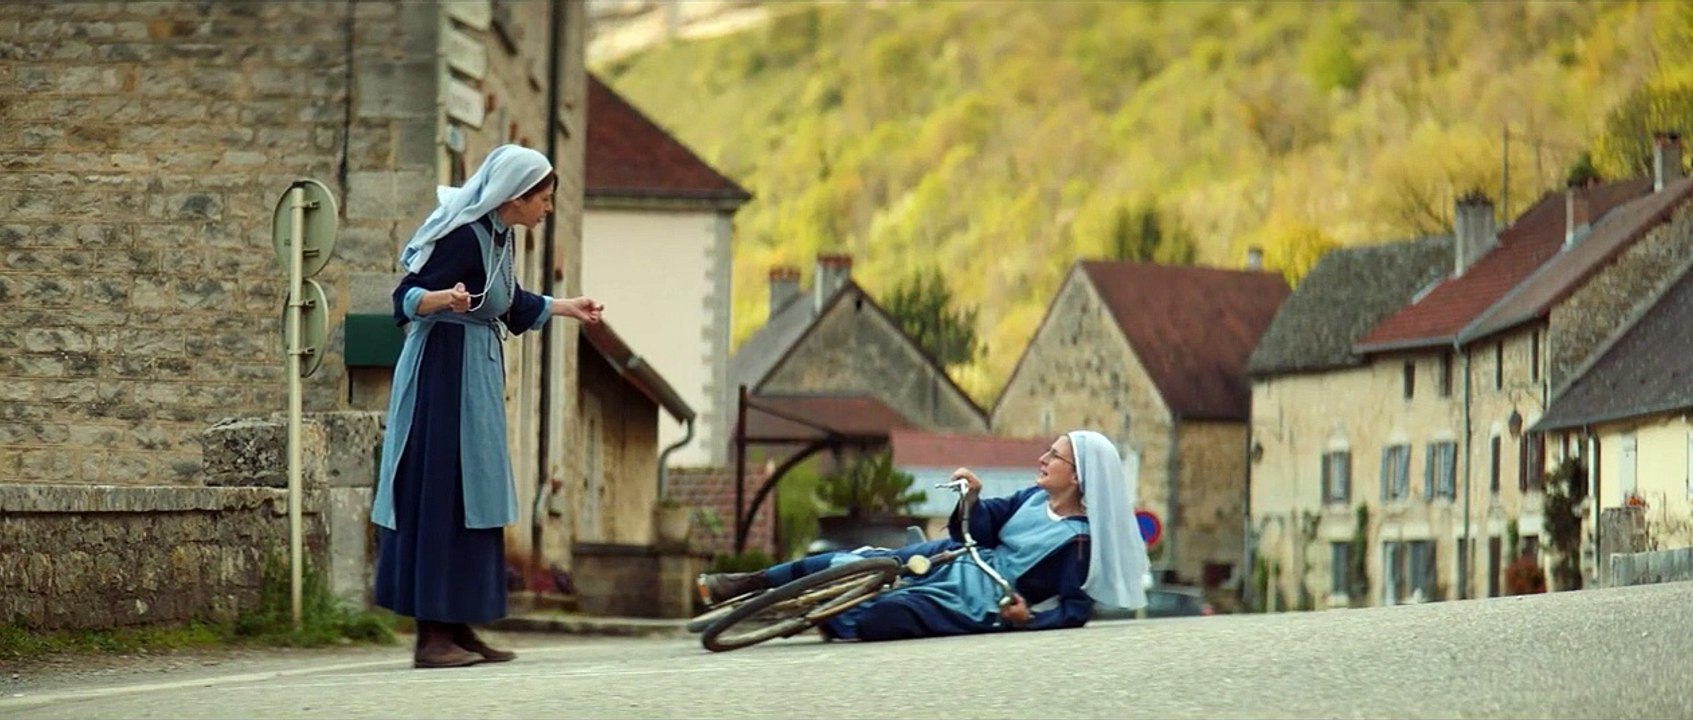 Das Nonnenrennen Trailer DF